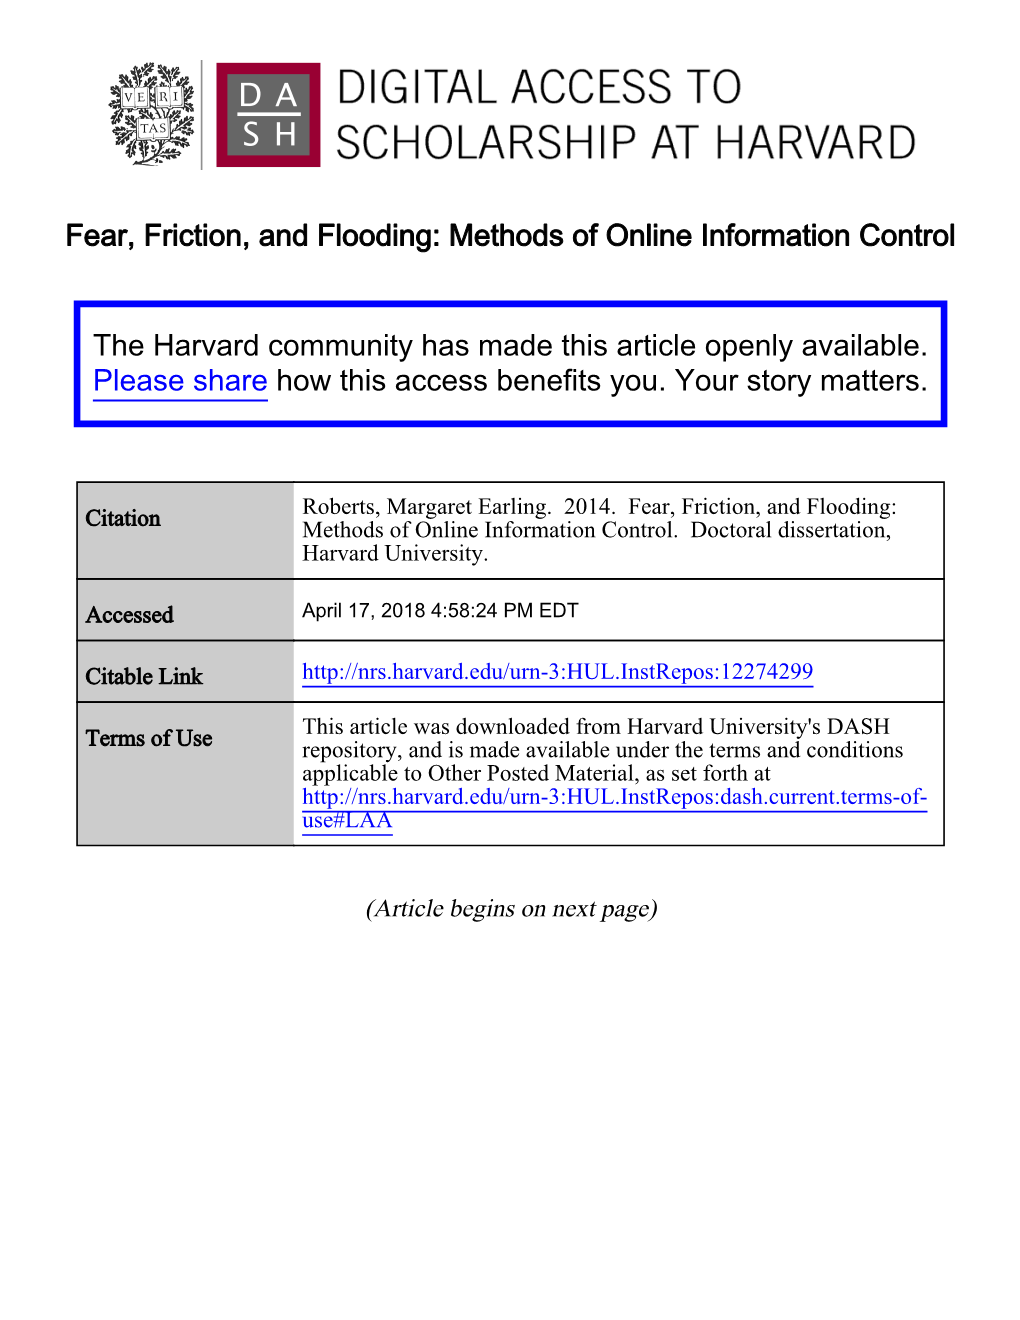 Methods of Online Information Control the Harvard Community